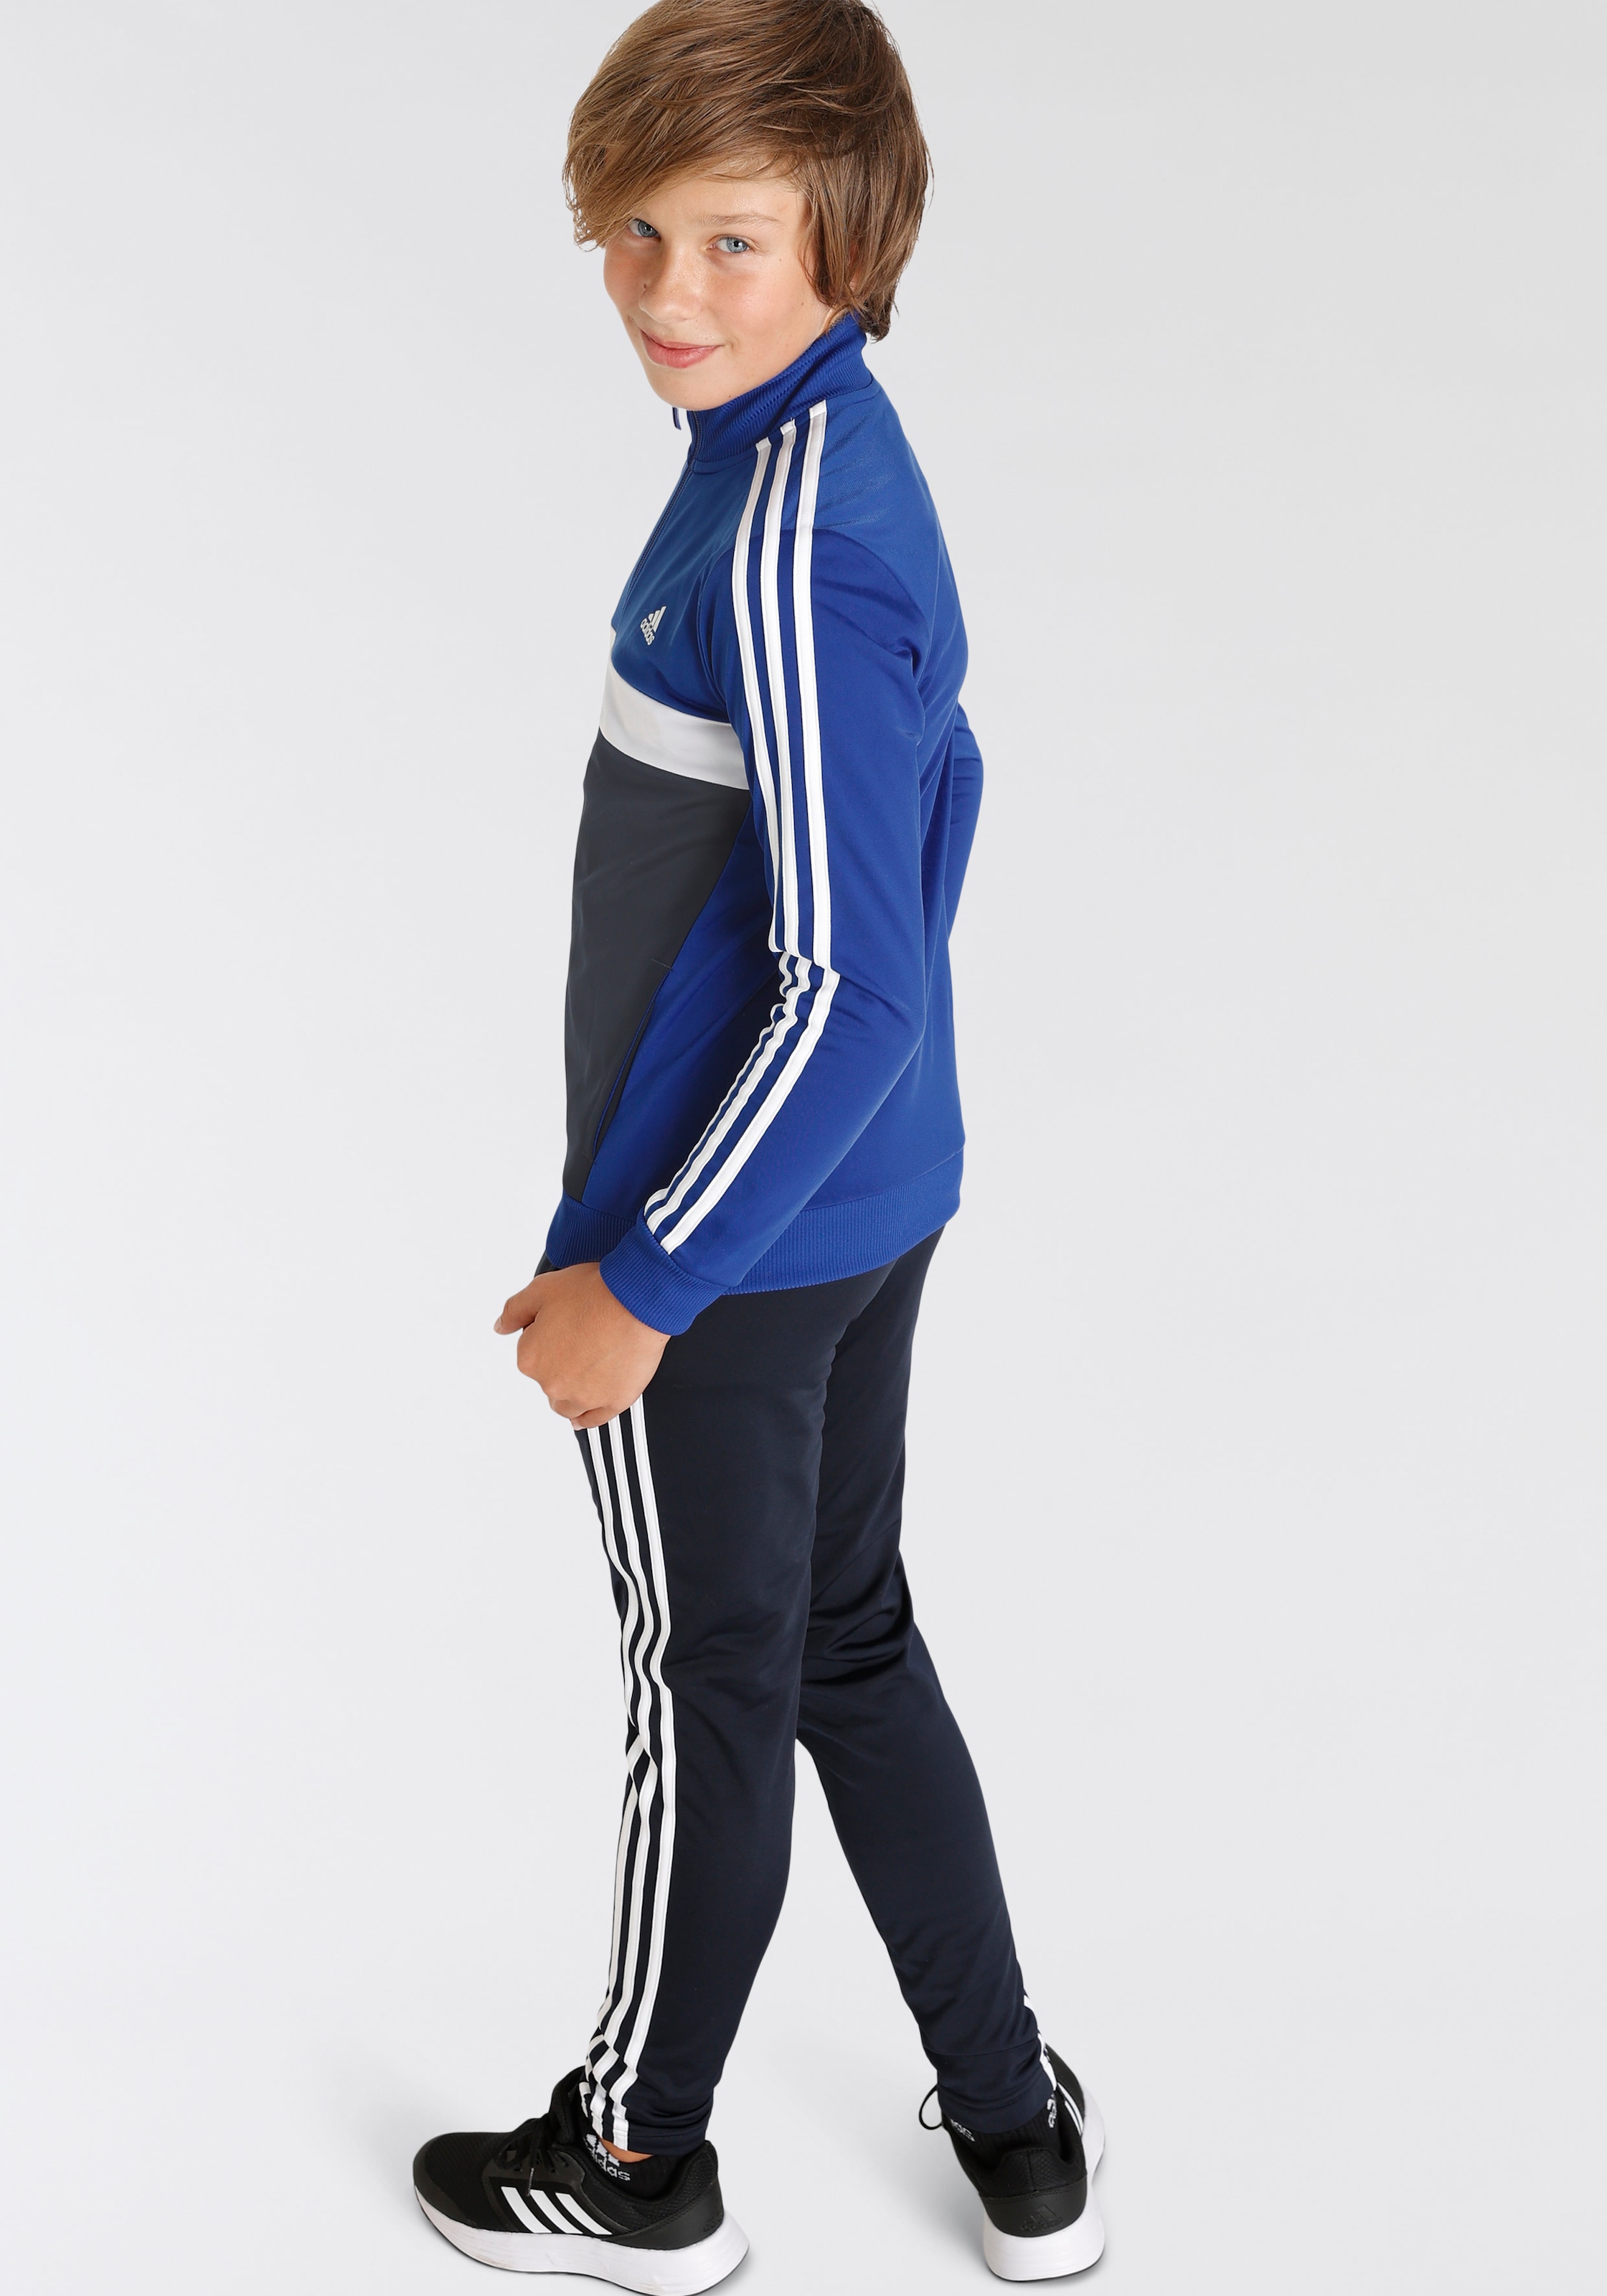 3S Shop Online (2 TIBERIO TS«, im »U Sportswear tlg.) OTTO Trainingsanzug adidas